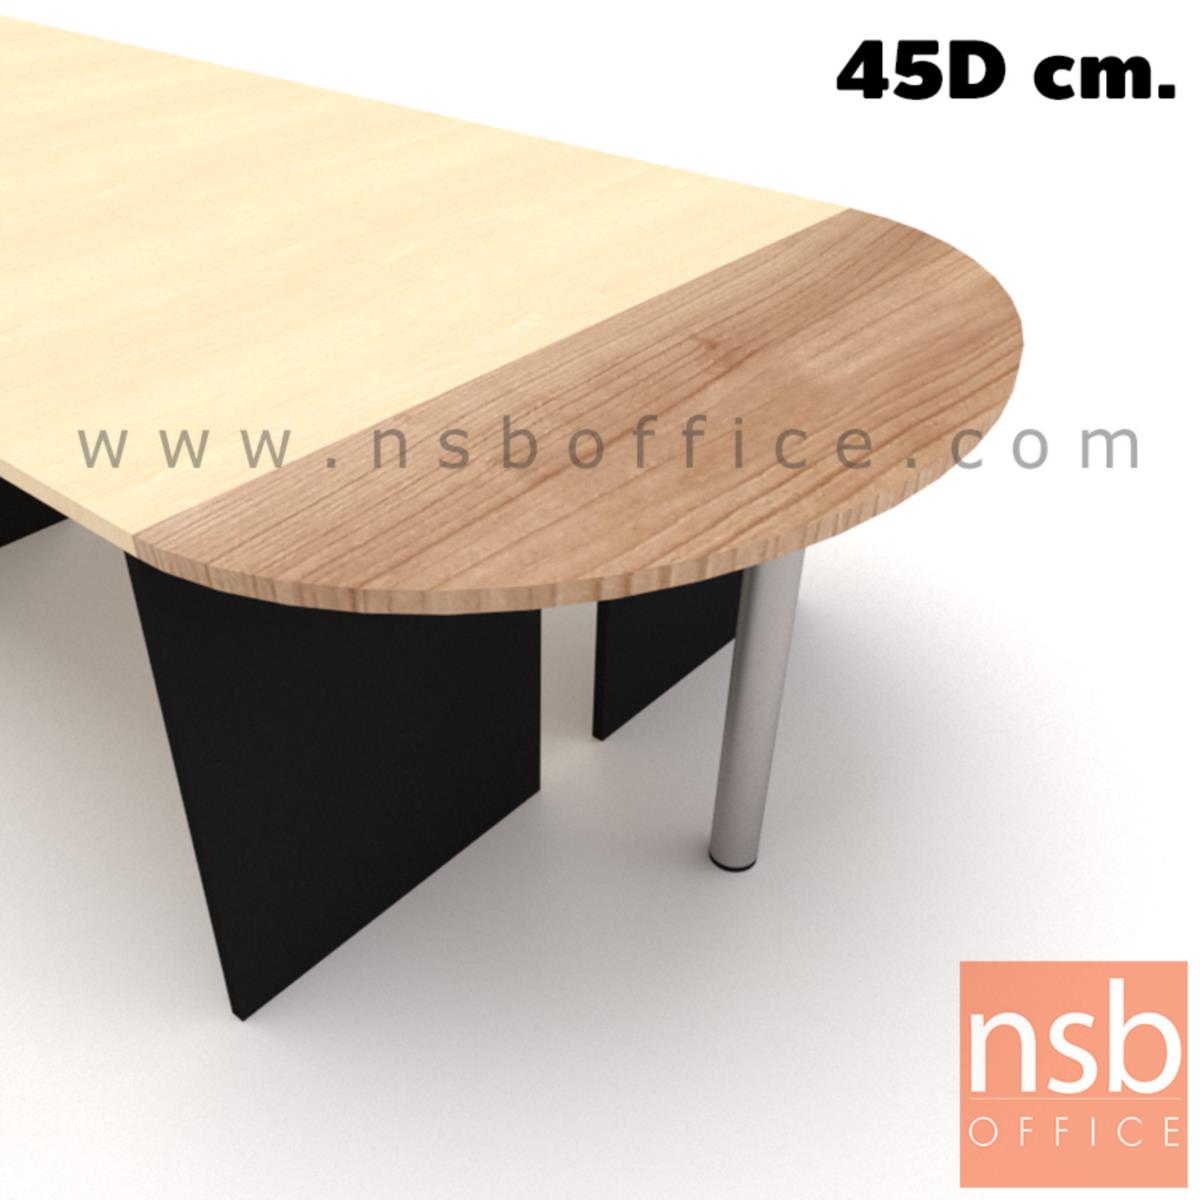 A04A060:โต๊ะเข้ามุมหัวโค้งแต่ไม่ครึ่งวงกลม รุ่น NSB-2045 ขนาด 120W ,150W ,160W*45D cm.  ขากลมโครเมี่ยม